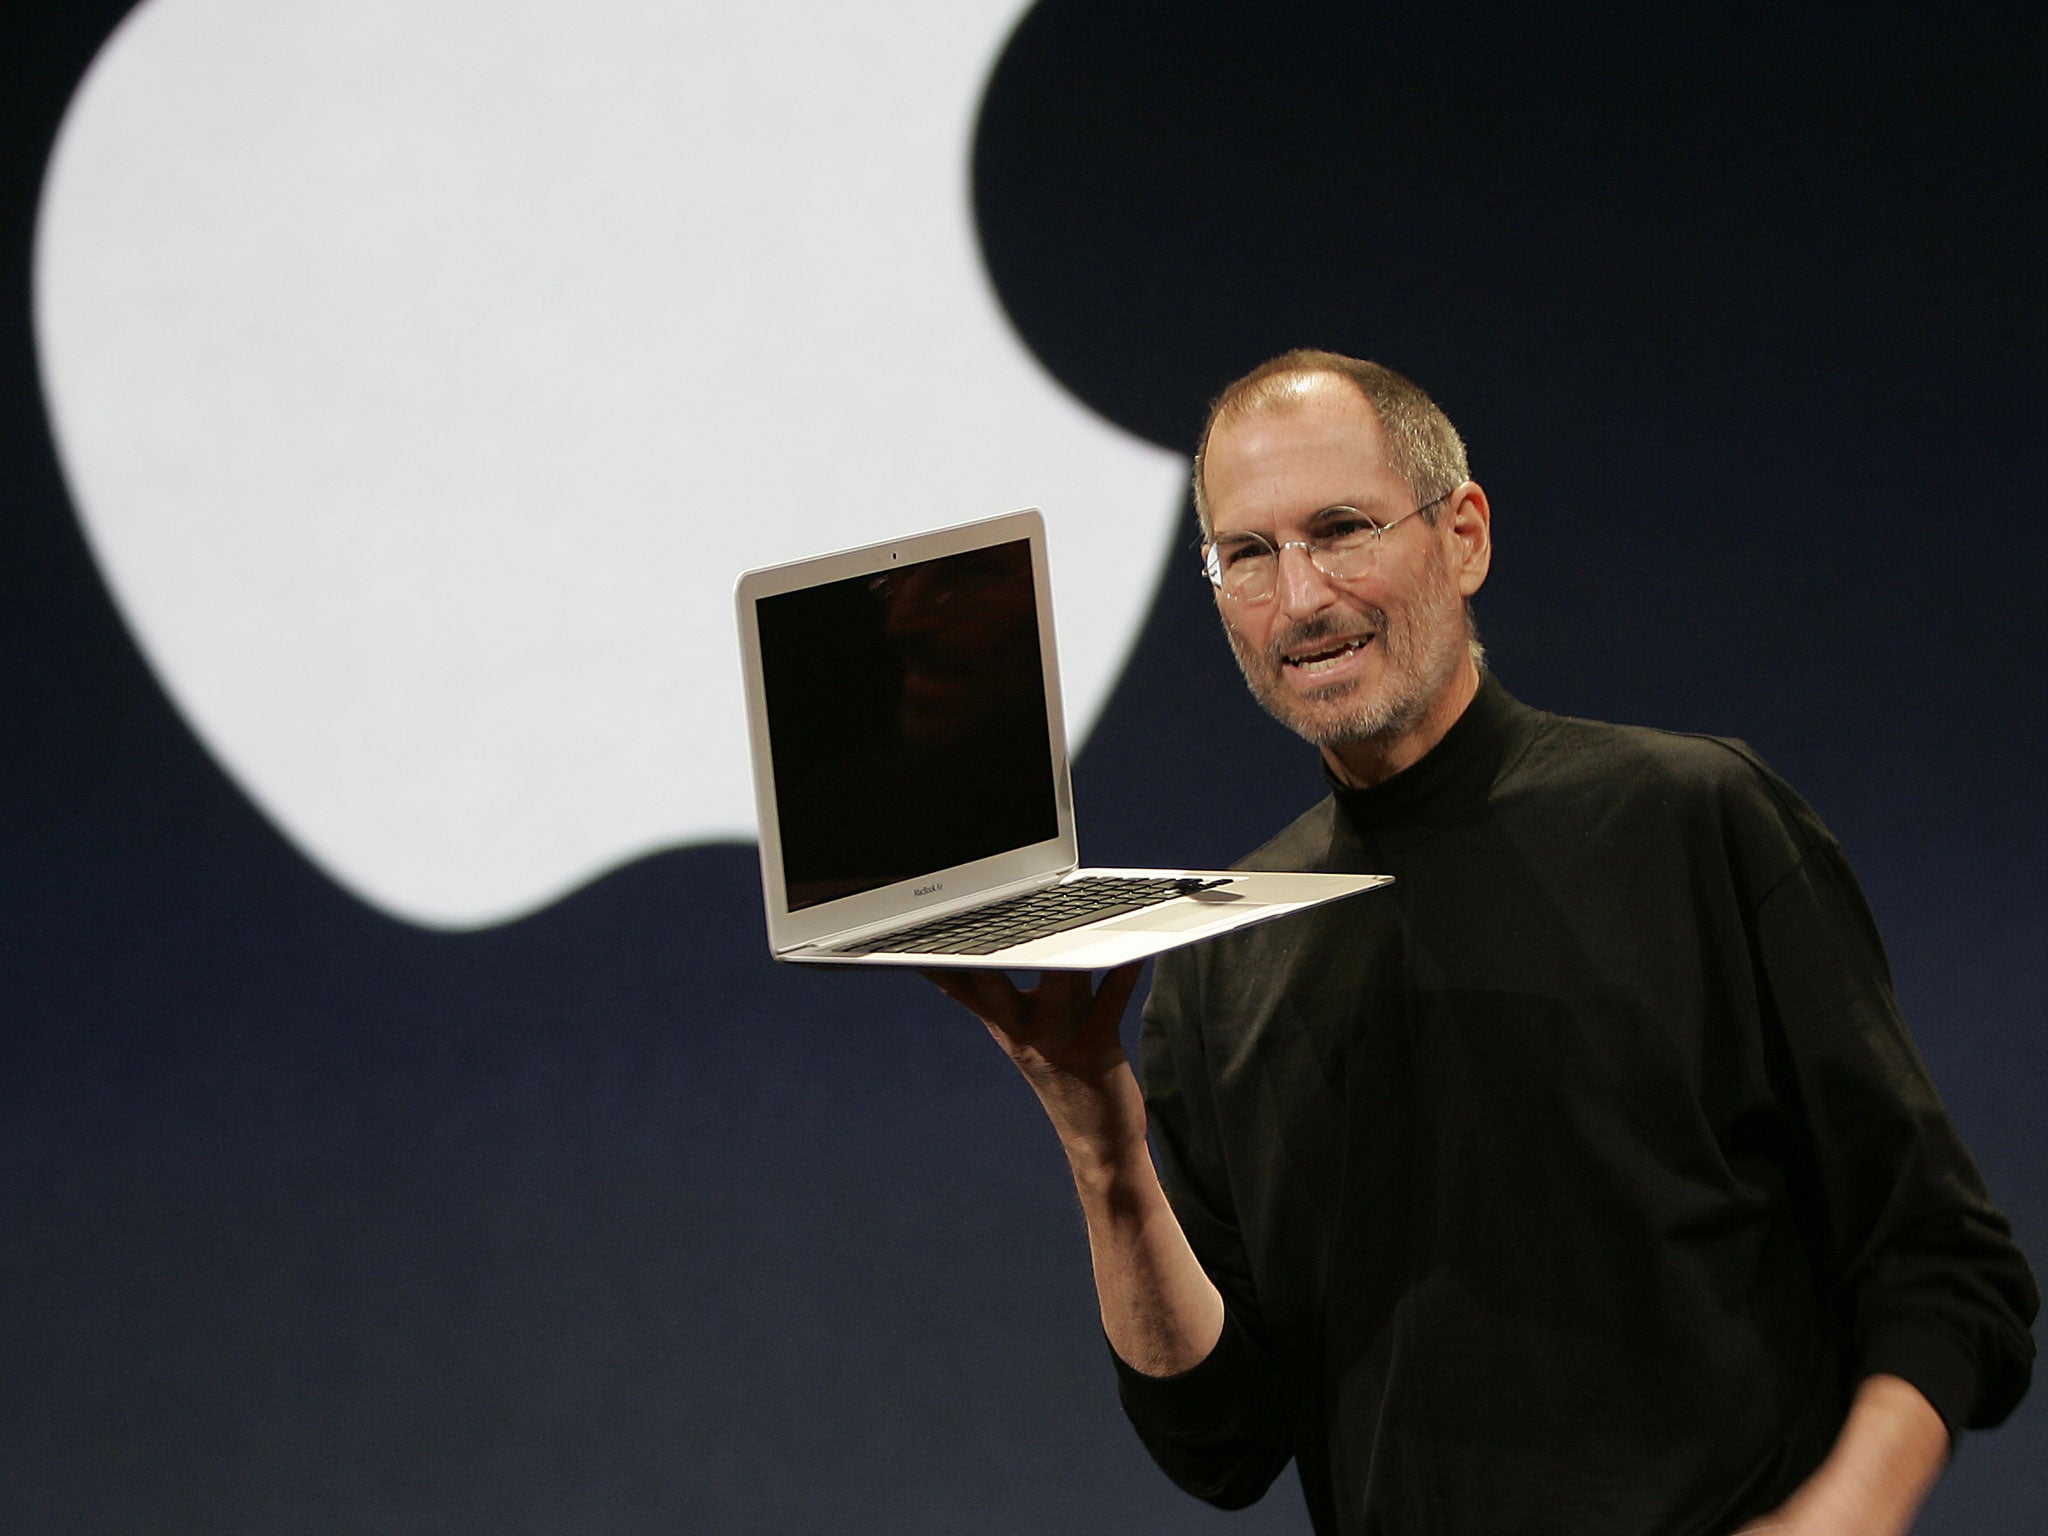 An extraordinary life: the late Steve Jobs in 2008